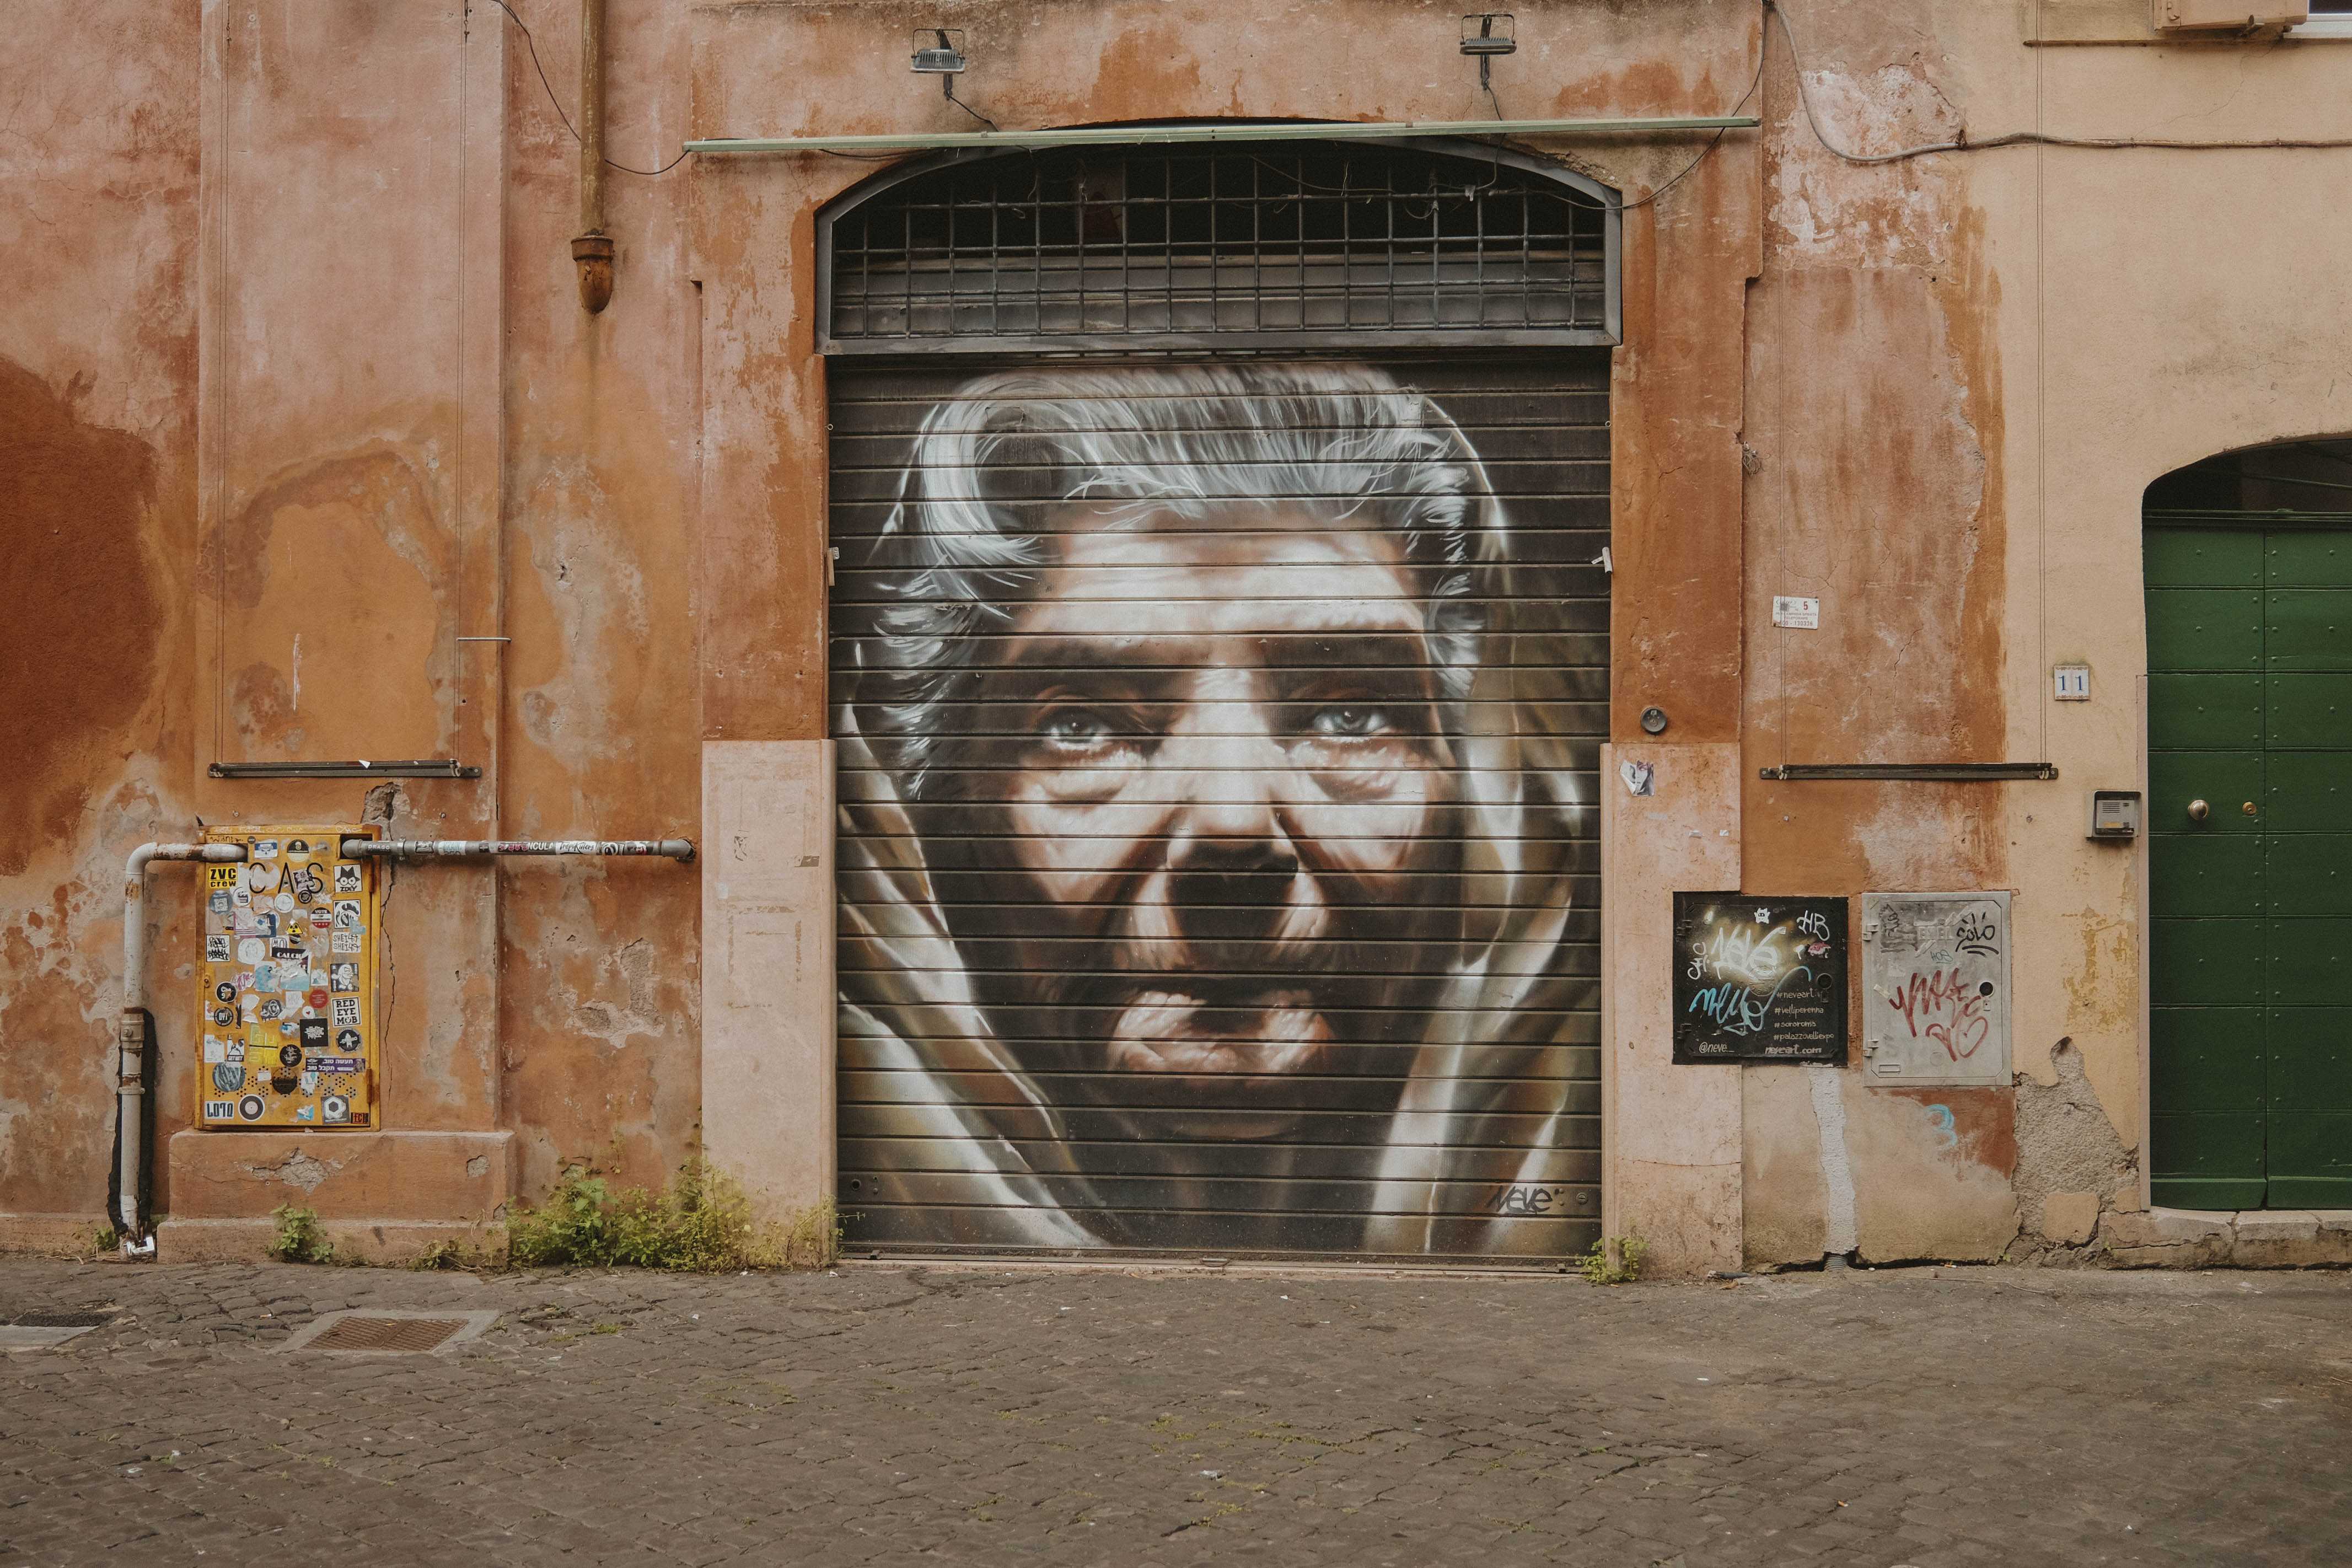 Street art, an image of an elderly lady